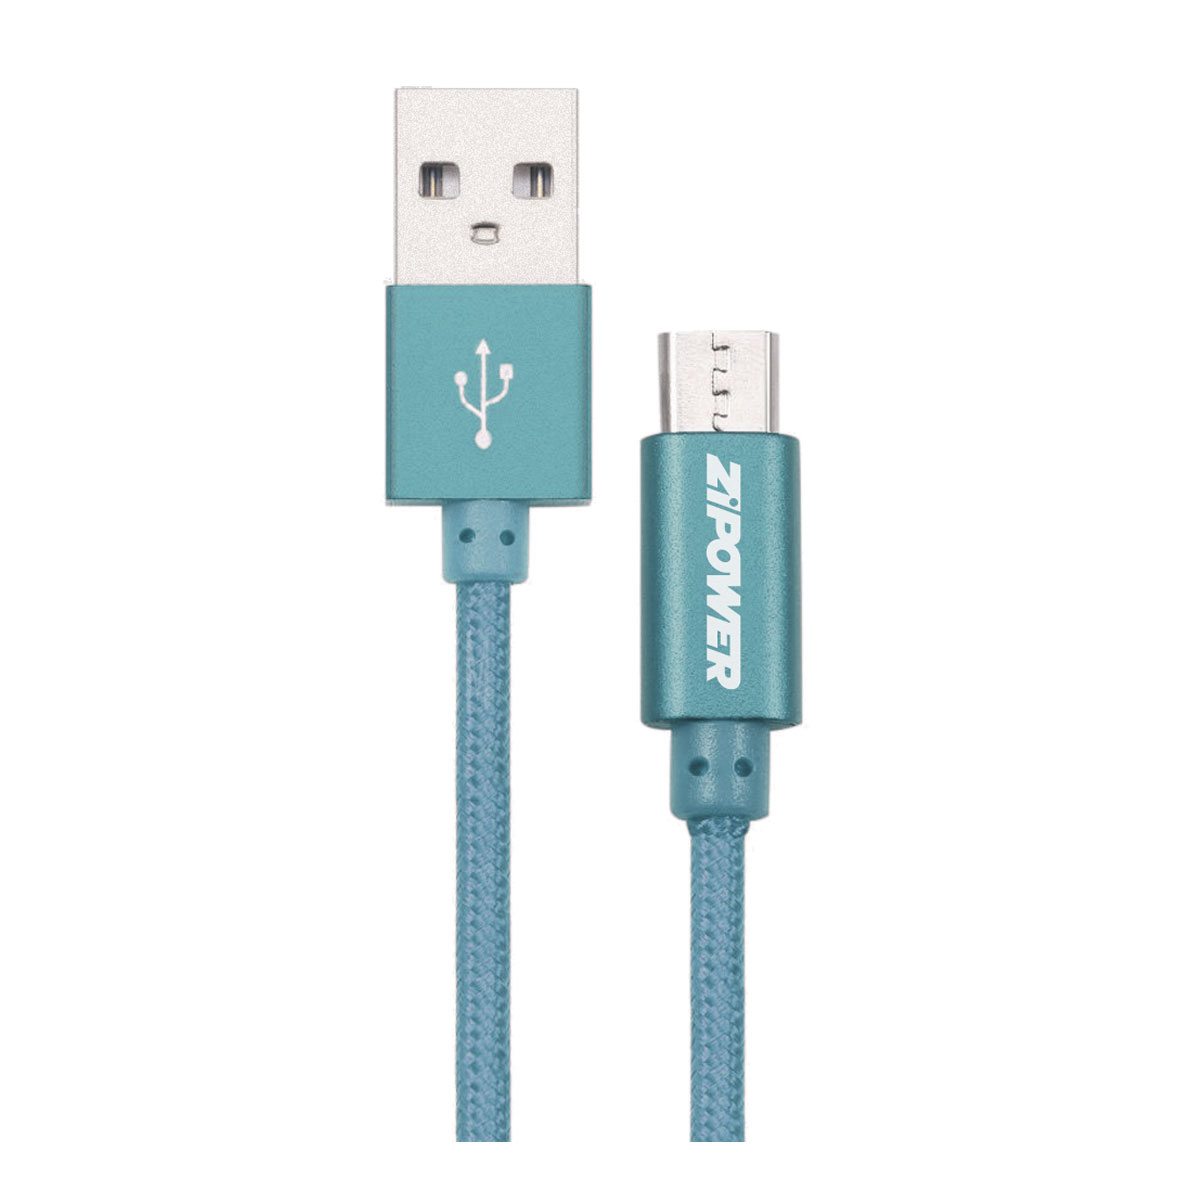   Армтек кабель! USB/Micro USB, 1м\